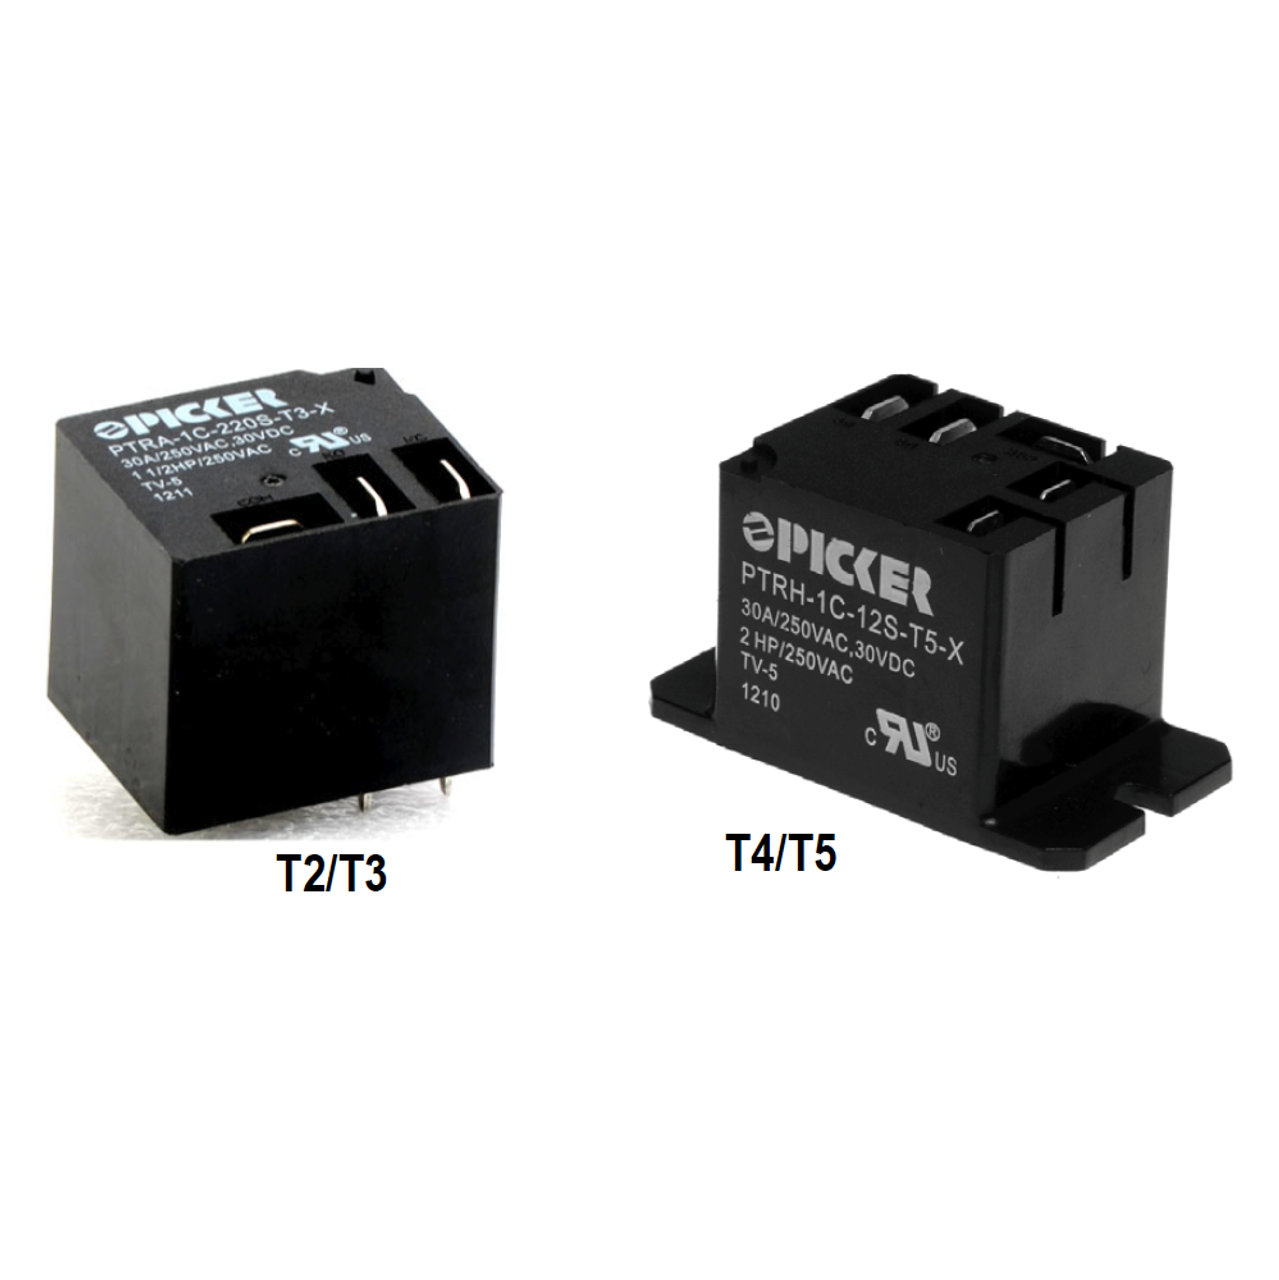 Picker PTRH-1C-110SF-T2-X67A0.6G Power Relays